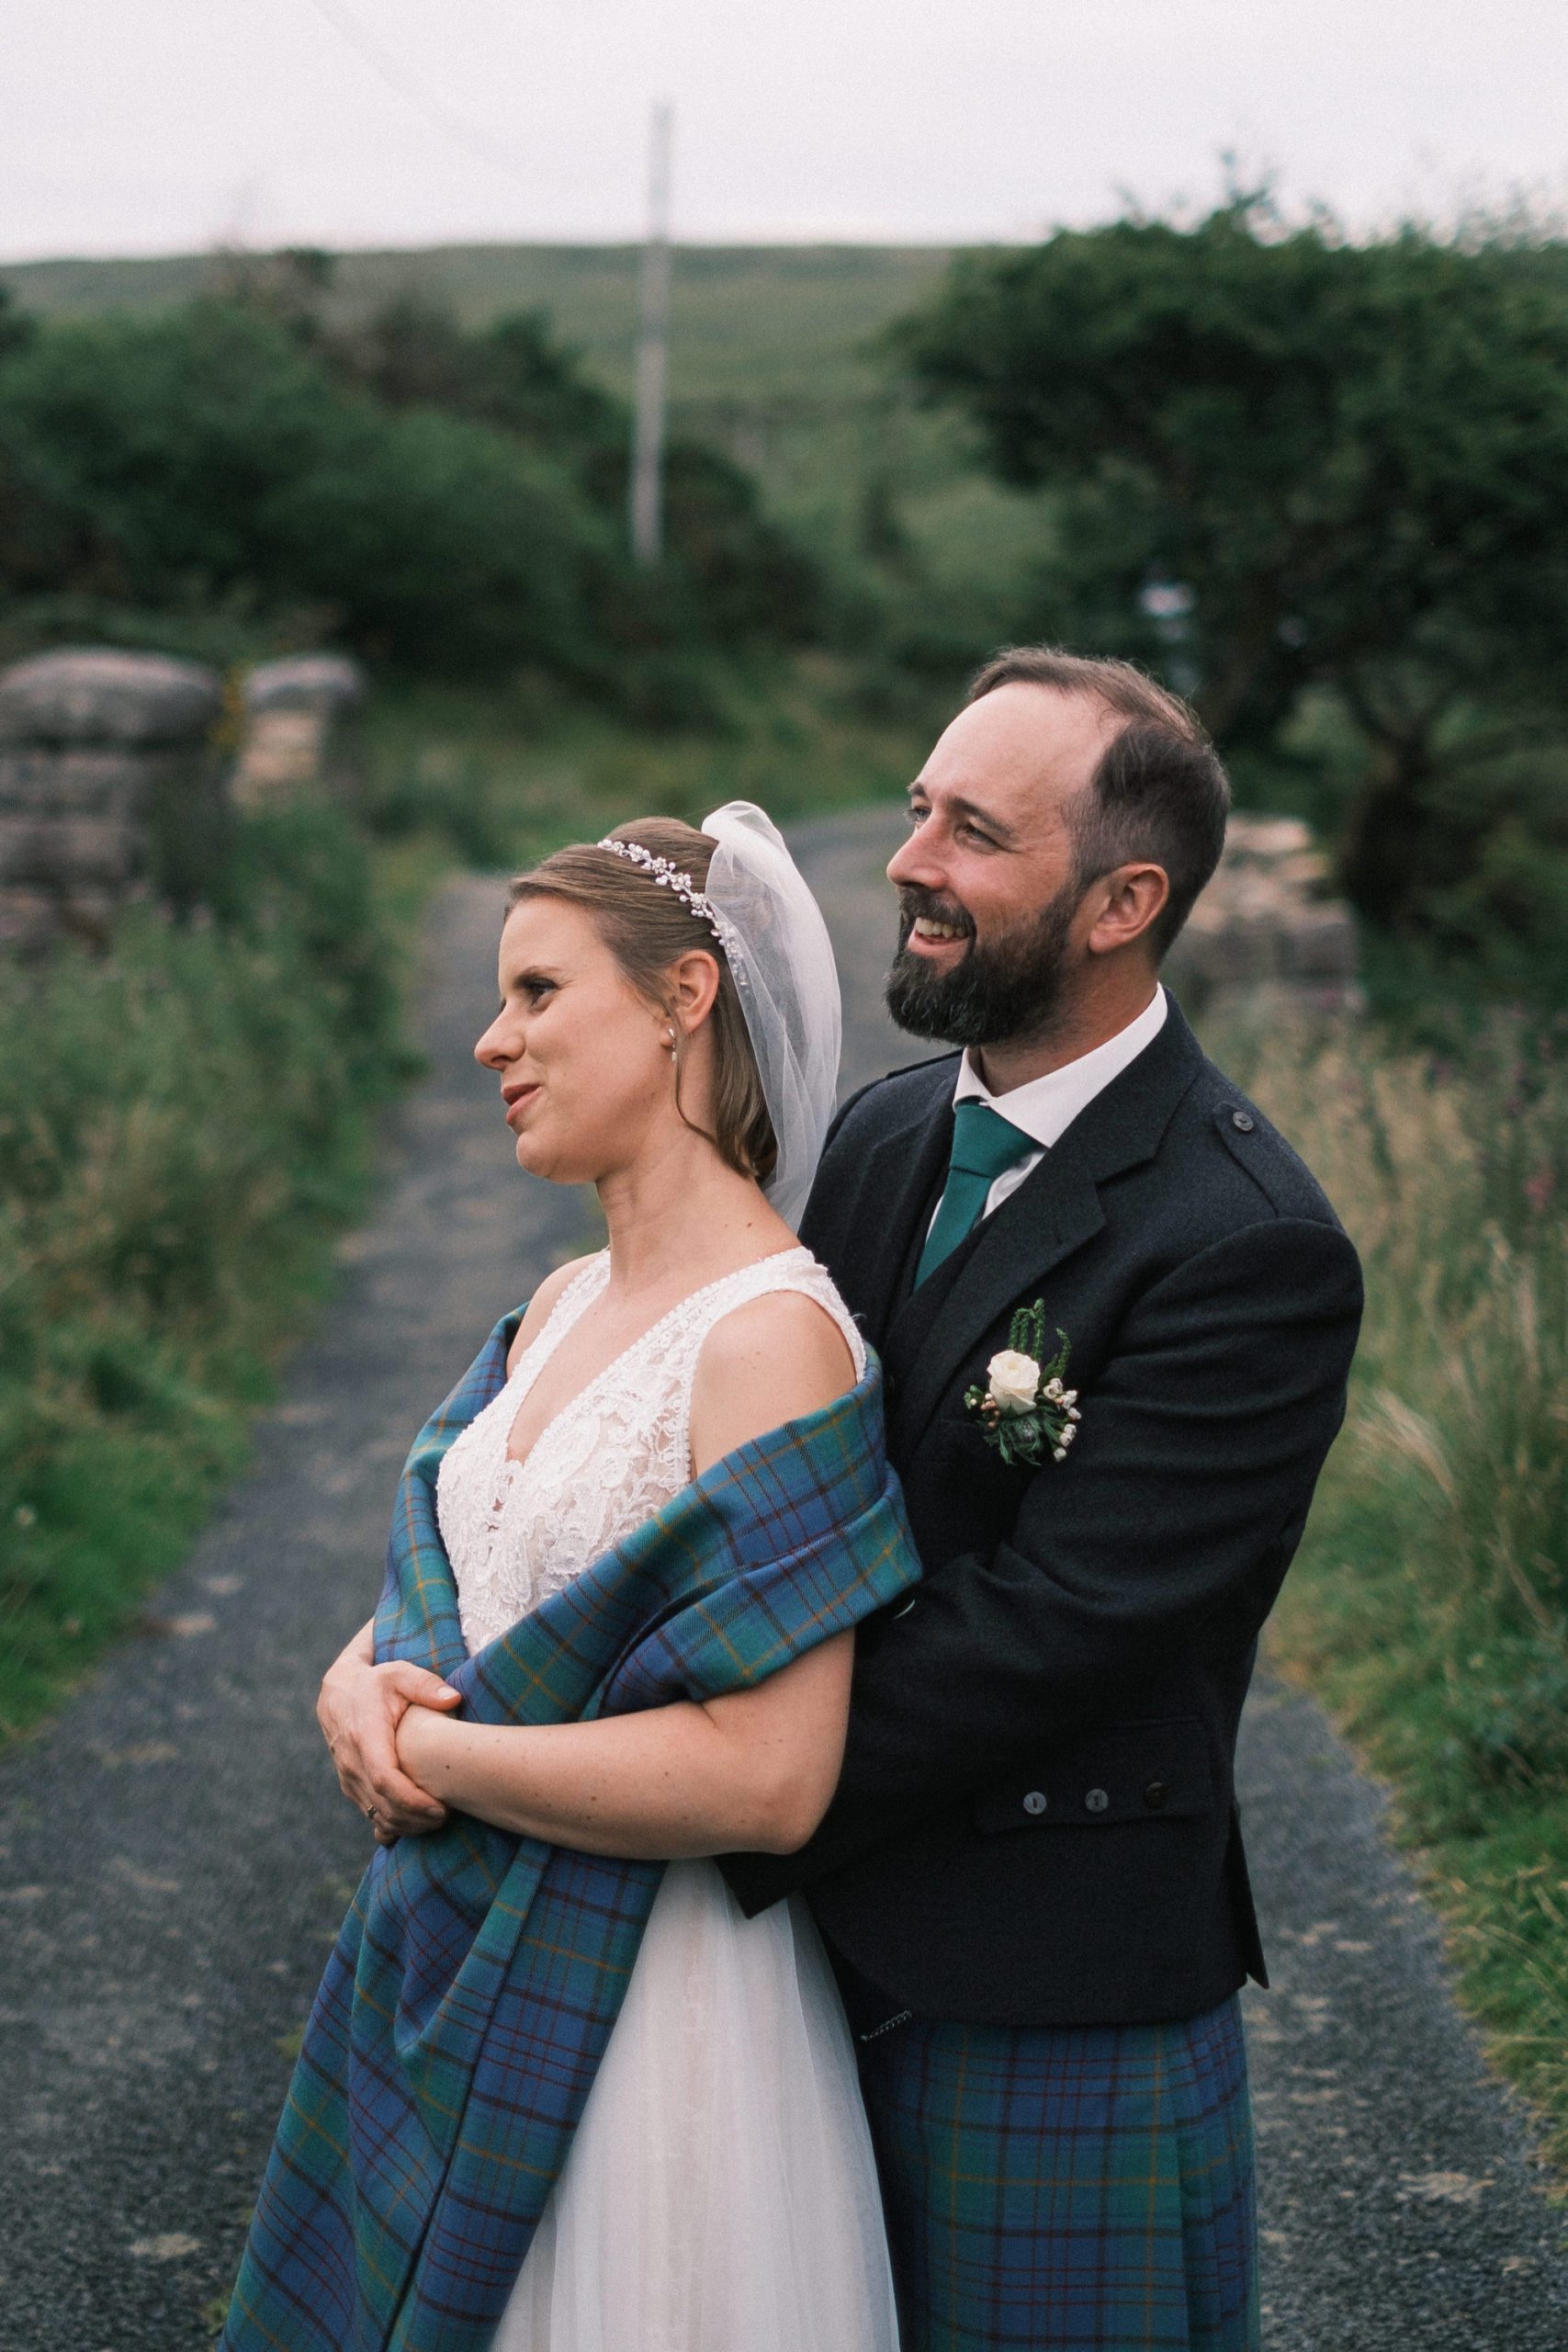 Wedding photographer Ireland